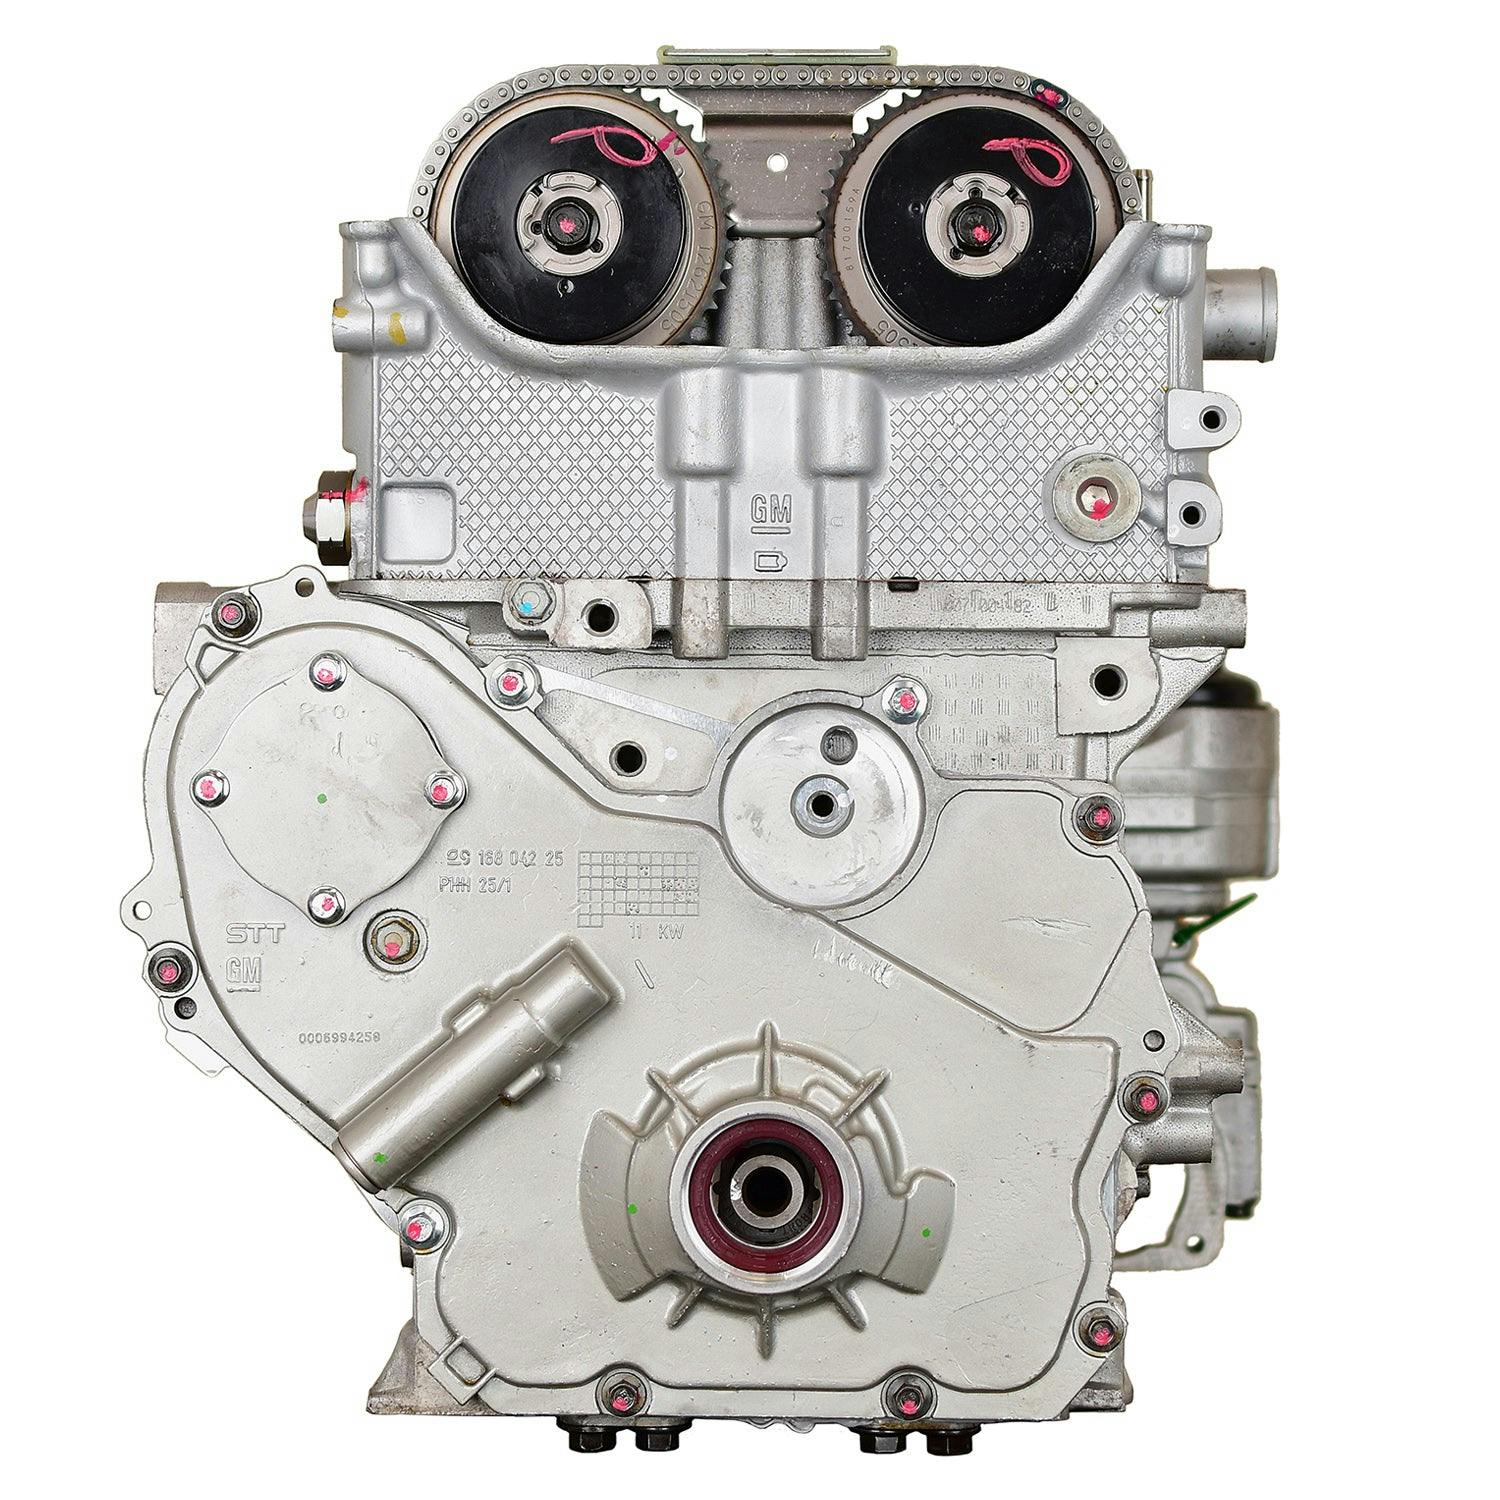 2.2L Inline-4 Engine for 2009-2011 Chevrolet Cobalt, HHR/Pontiac G5